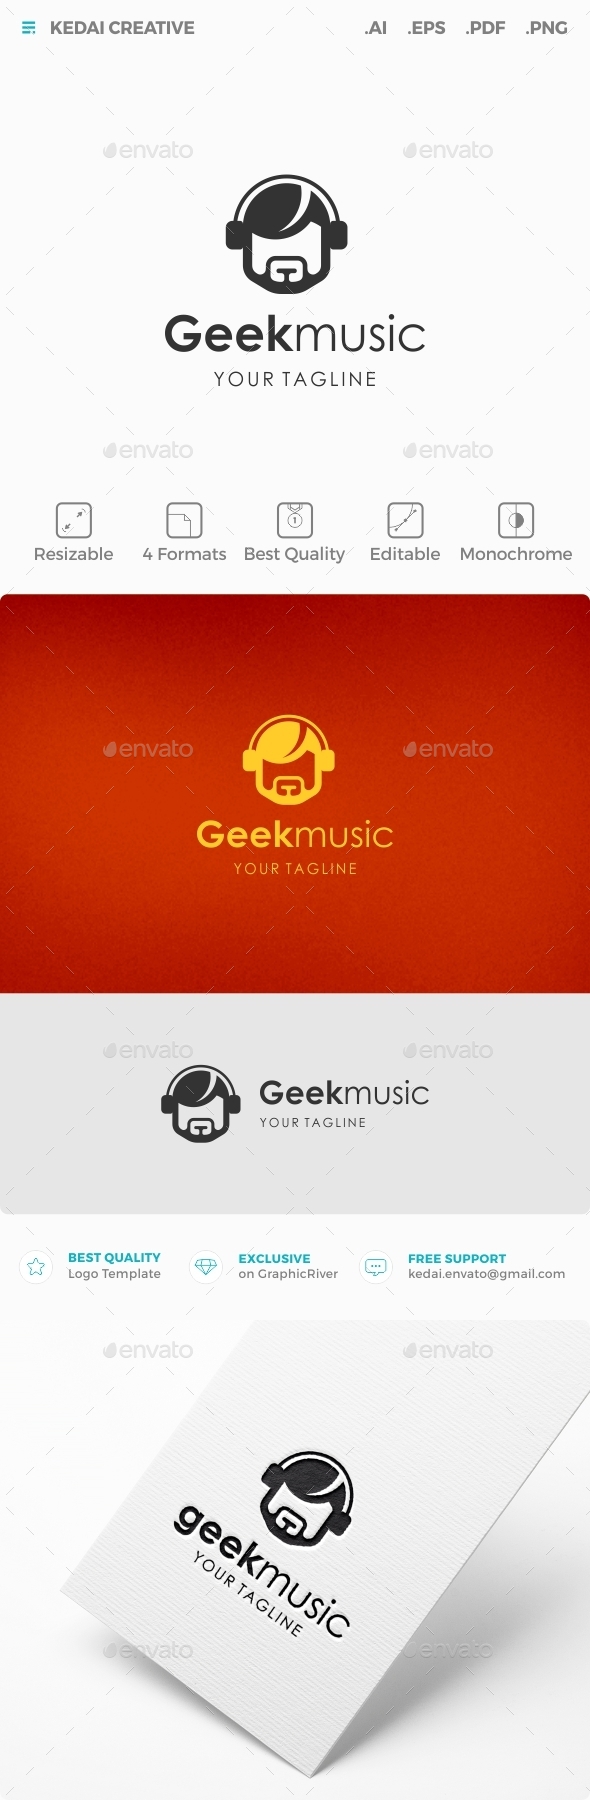 Geek Music